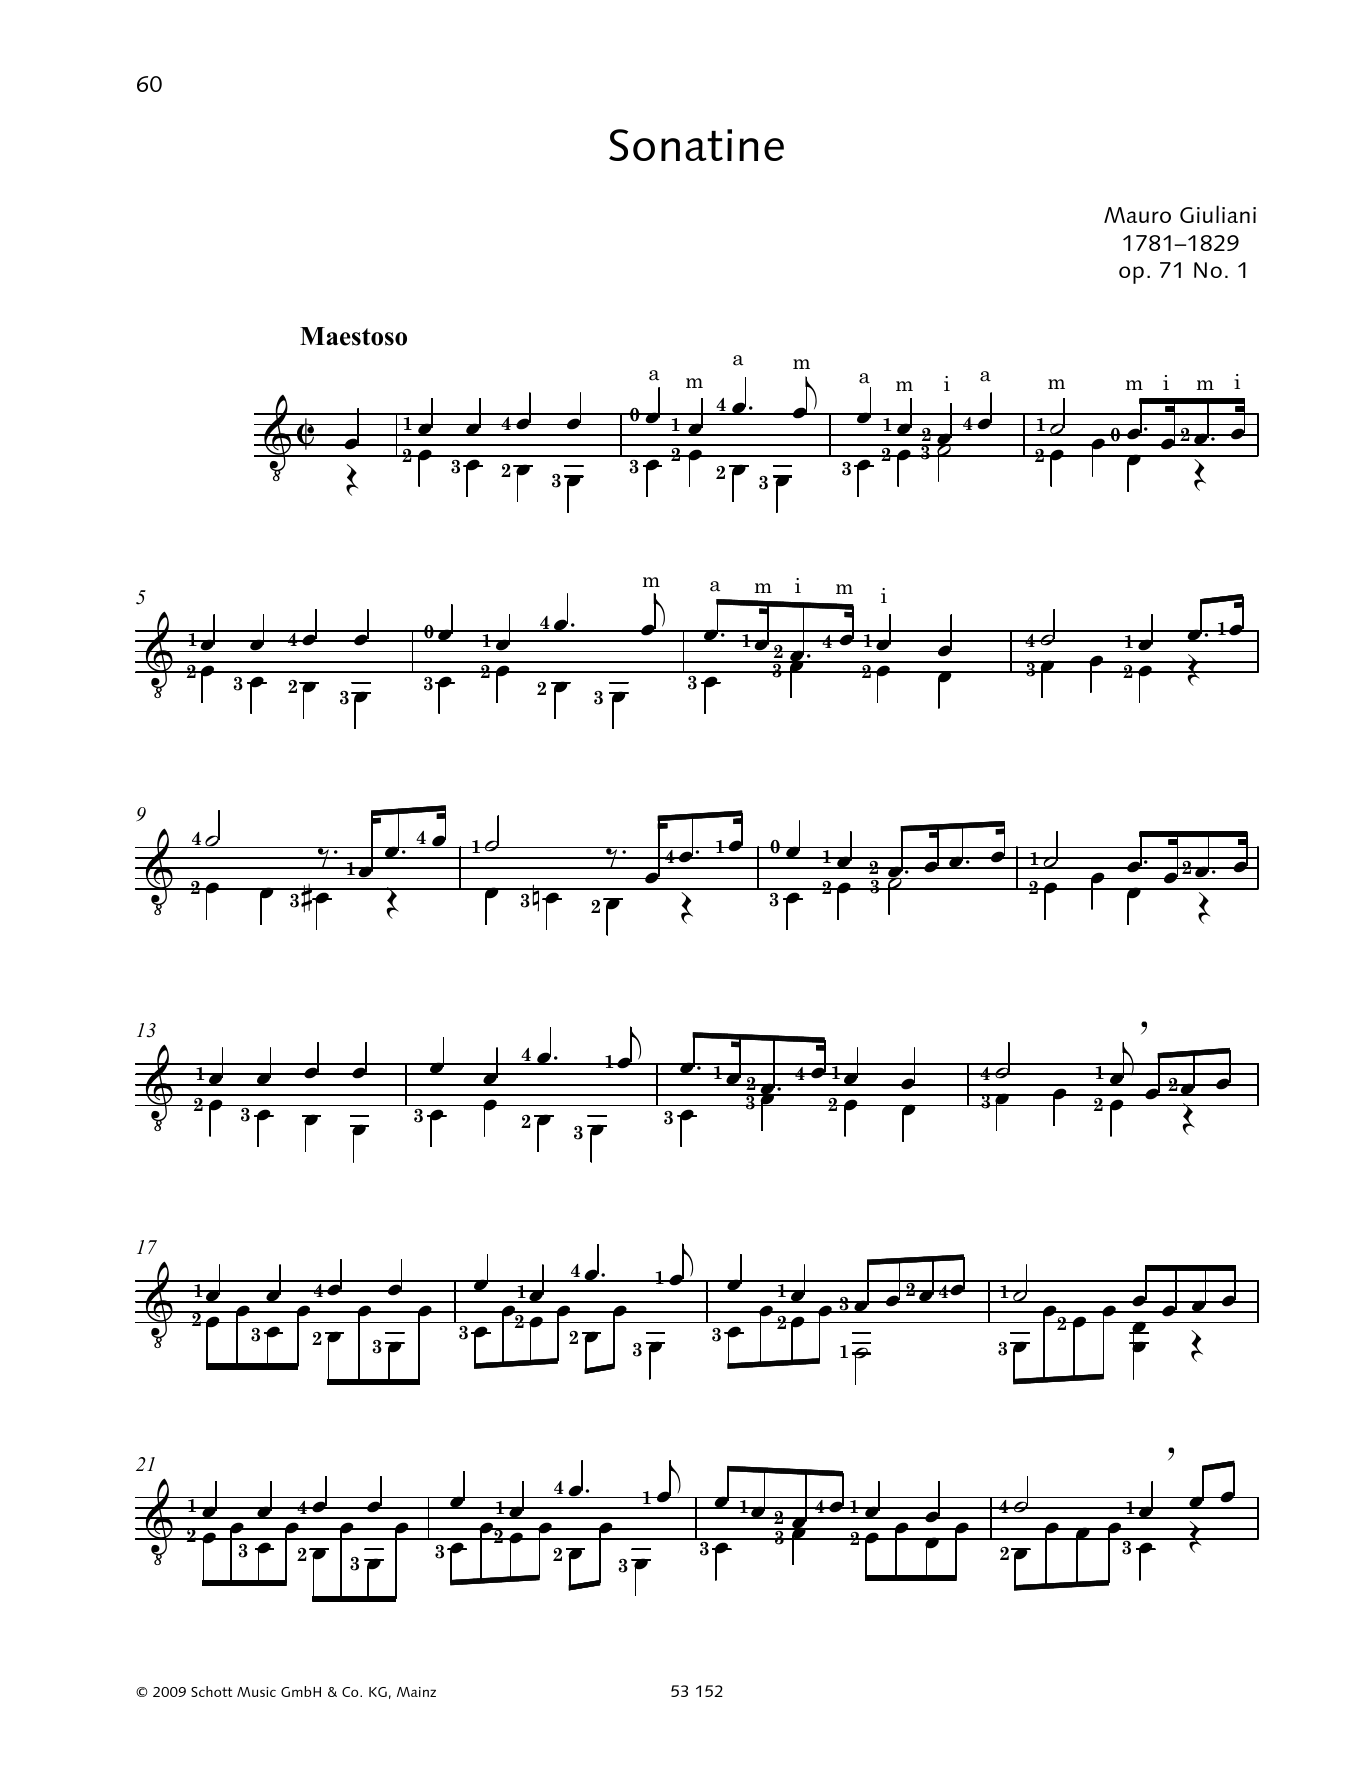 Mauro Giuliani Sonatina Sheet Music Notes & Chords for Solo Guitar - Download or Print PDF